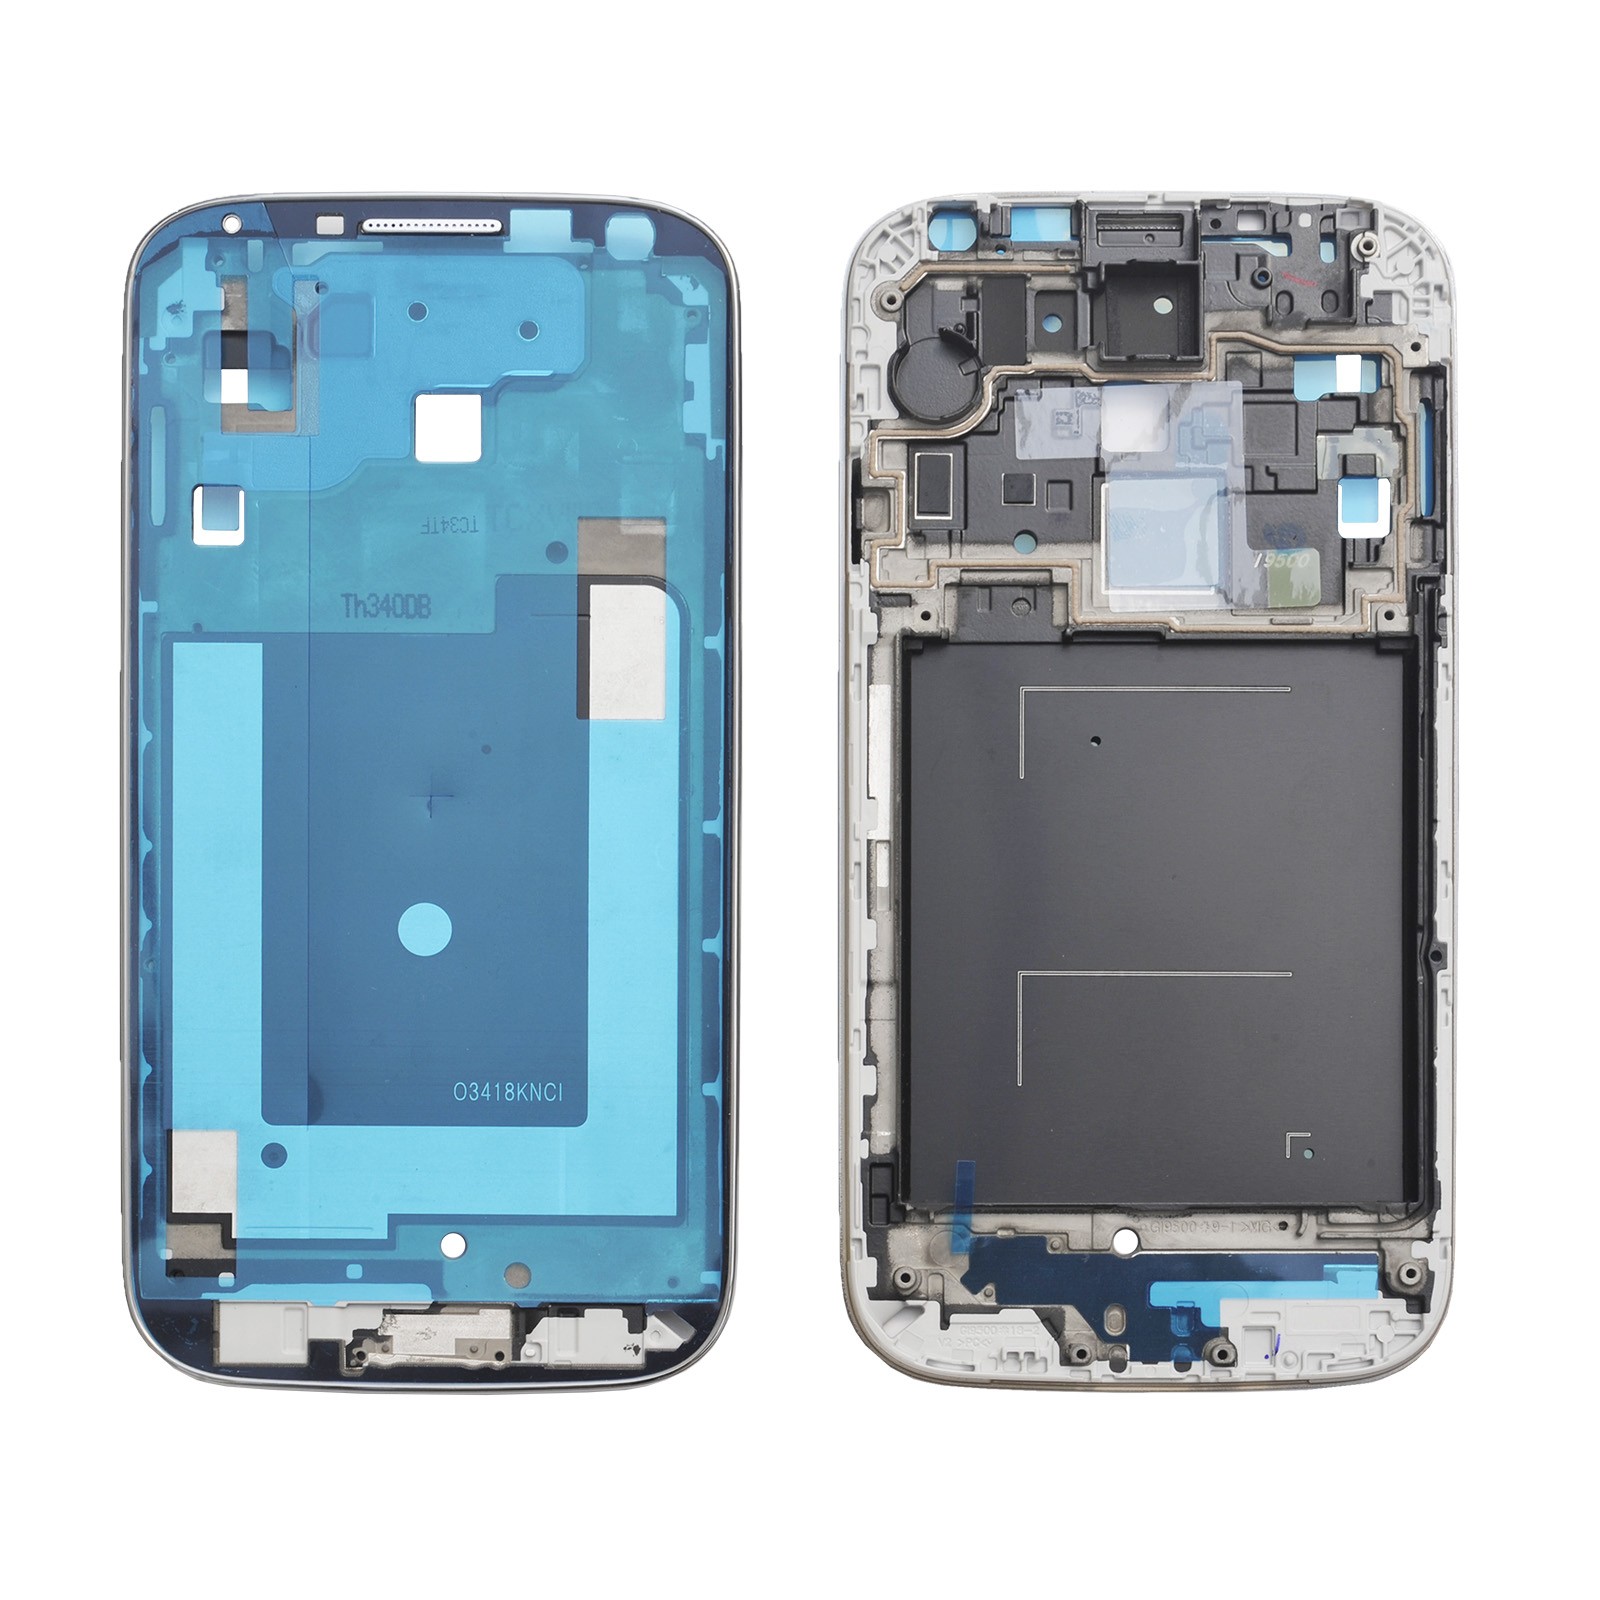 Carcaça traseira para Samsung Galaxy S4, I9500